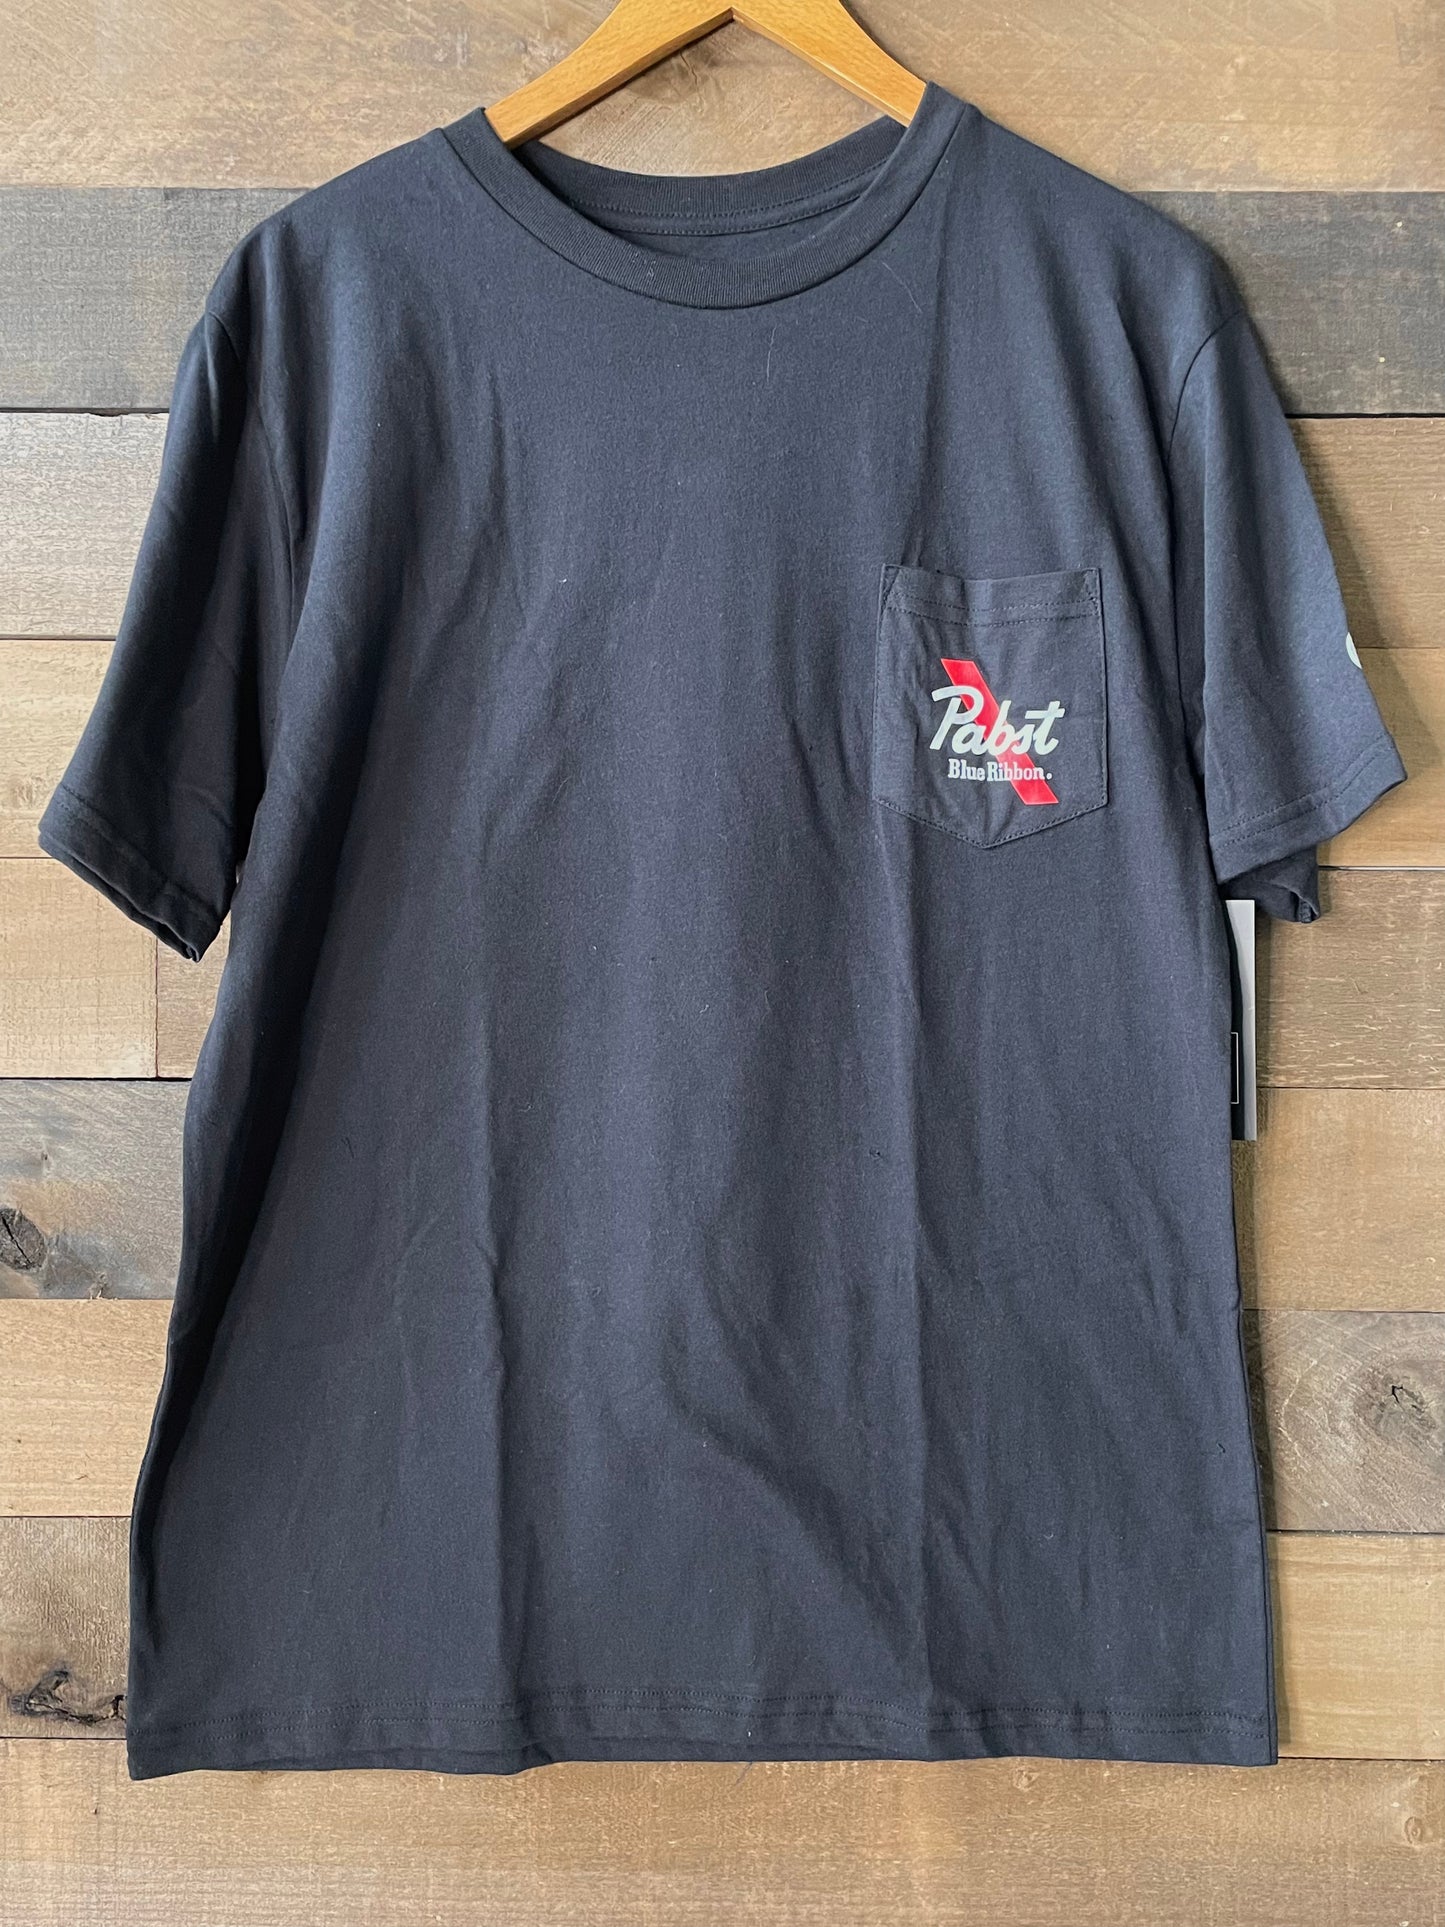 Pabst Blue Ribbon Black Pocket T-Shirt